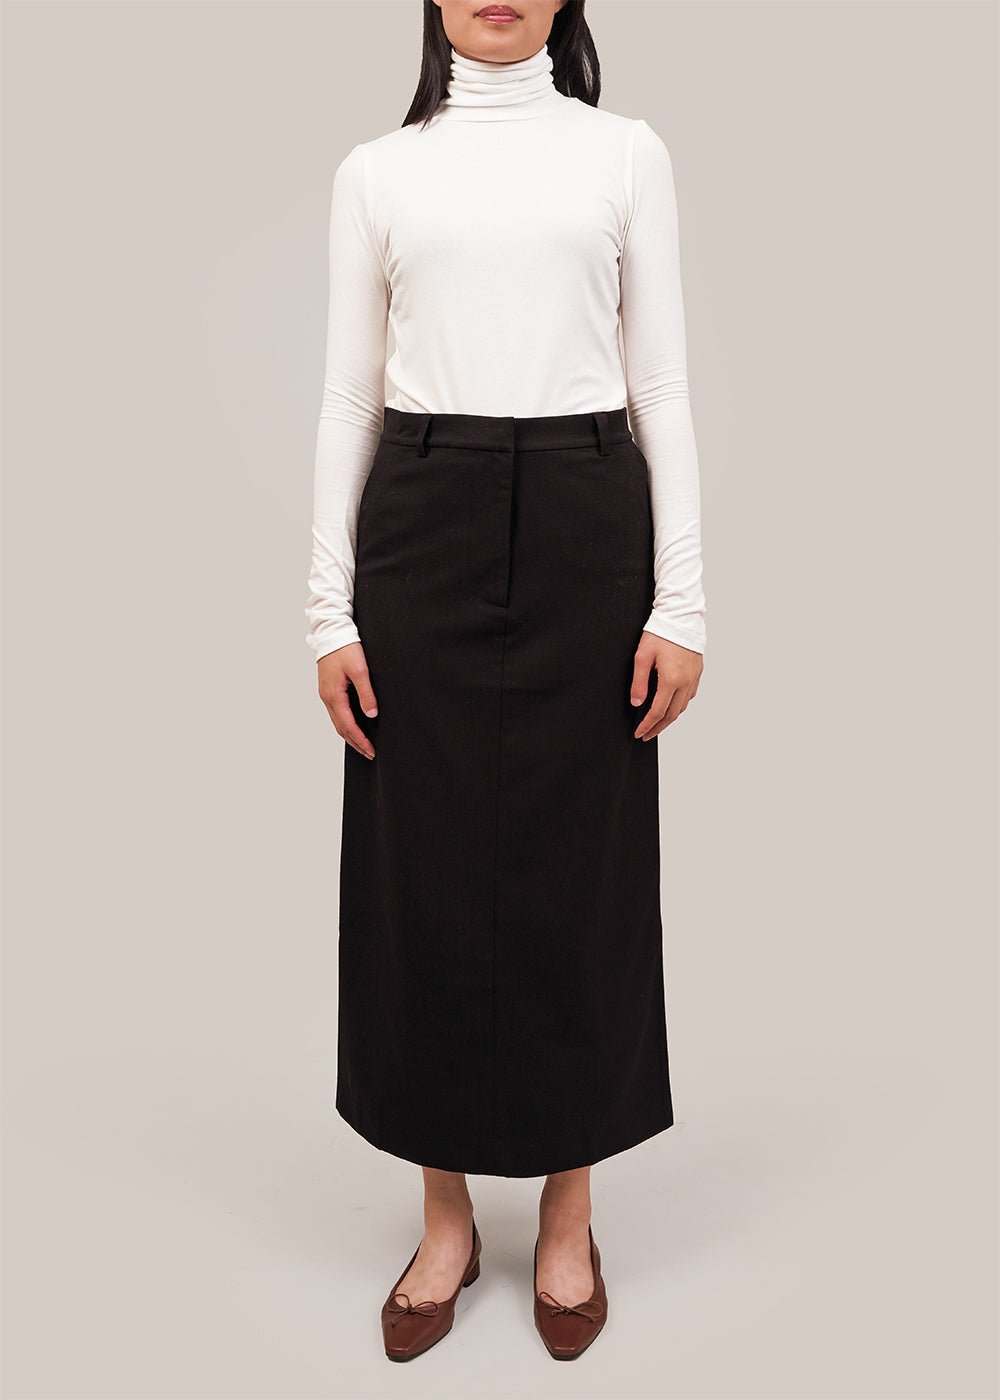 Mijeong Park Black Wool Blend Midi Skirt - New Classics Studios Sustainable Ethical Fashion Canada